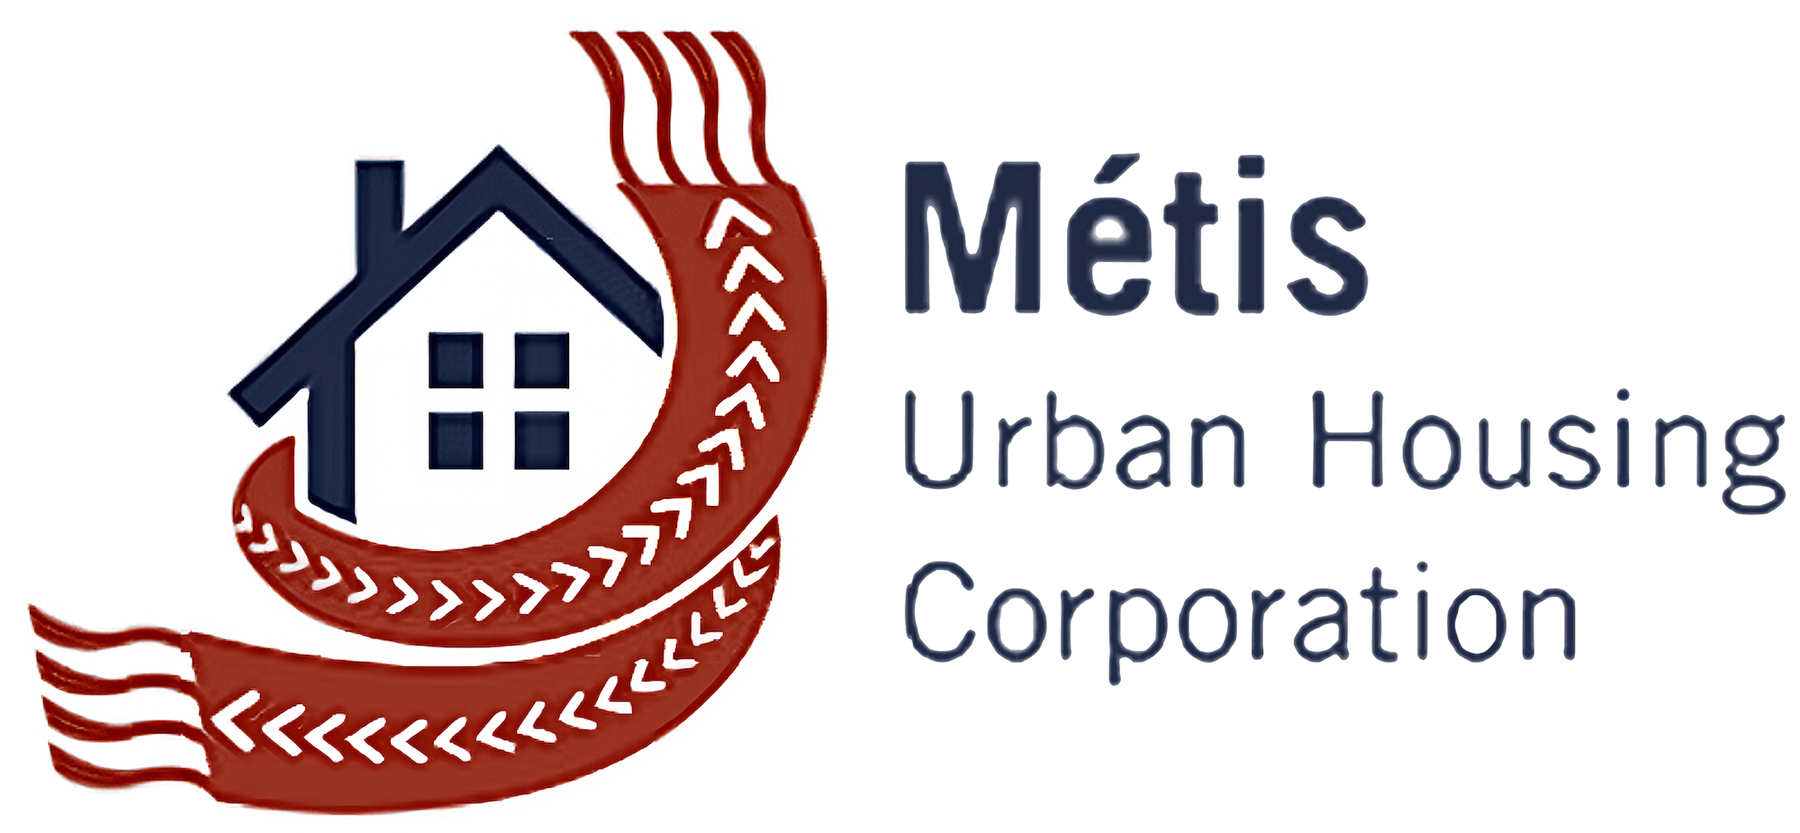 Logo for Urban Housing Corporation